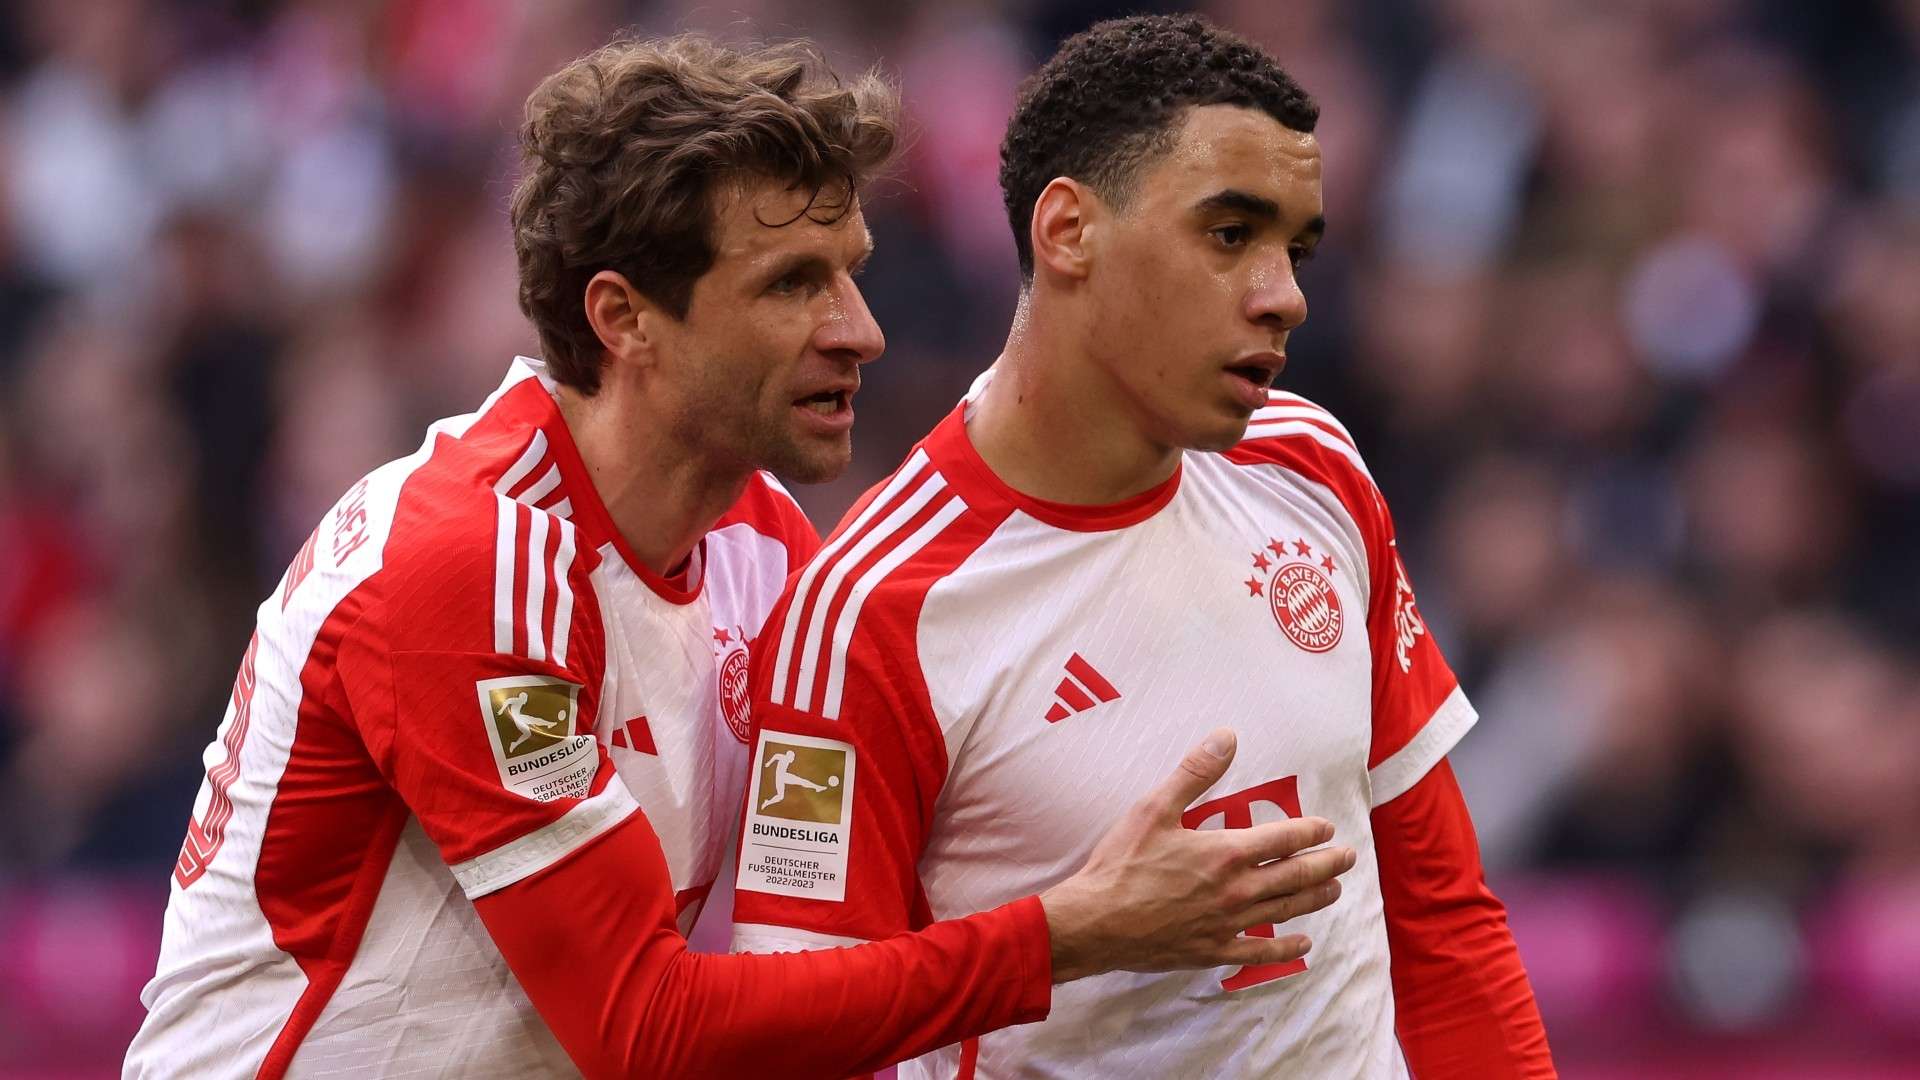 Thomas Müller of Bayern München talks to his team mate Jamal Musiala